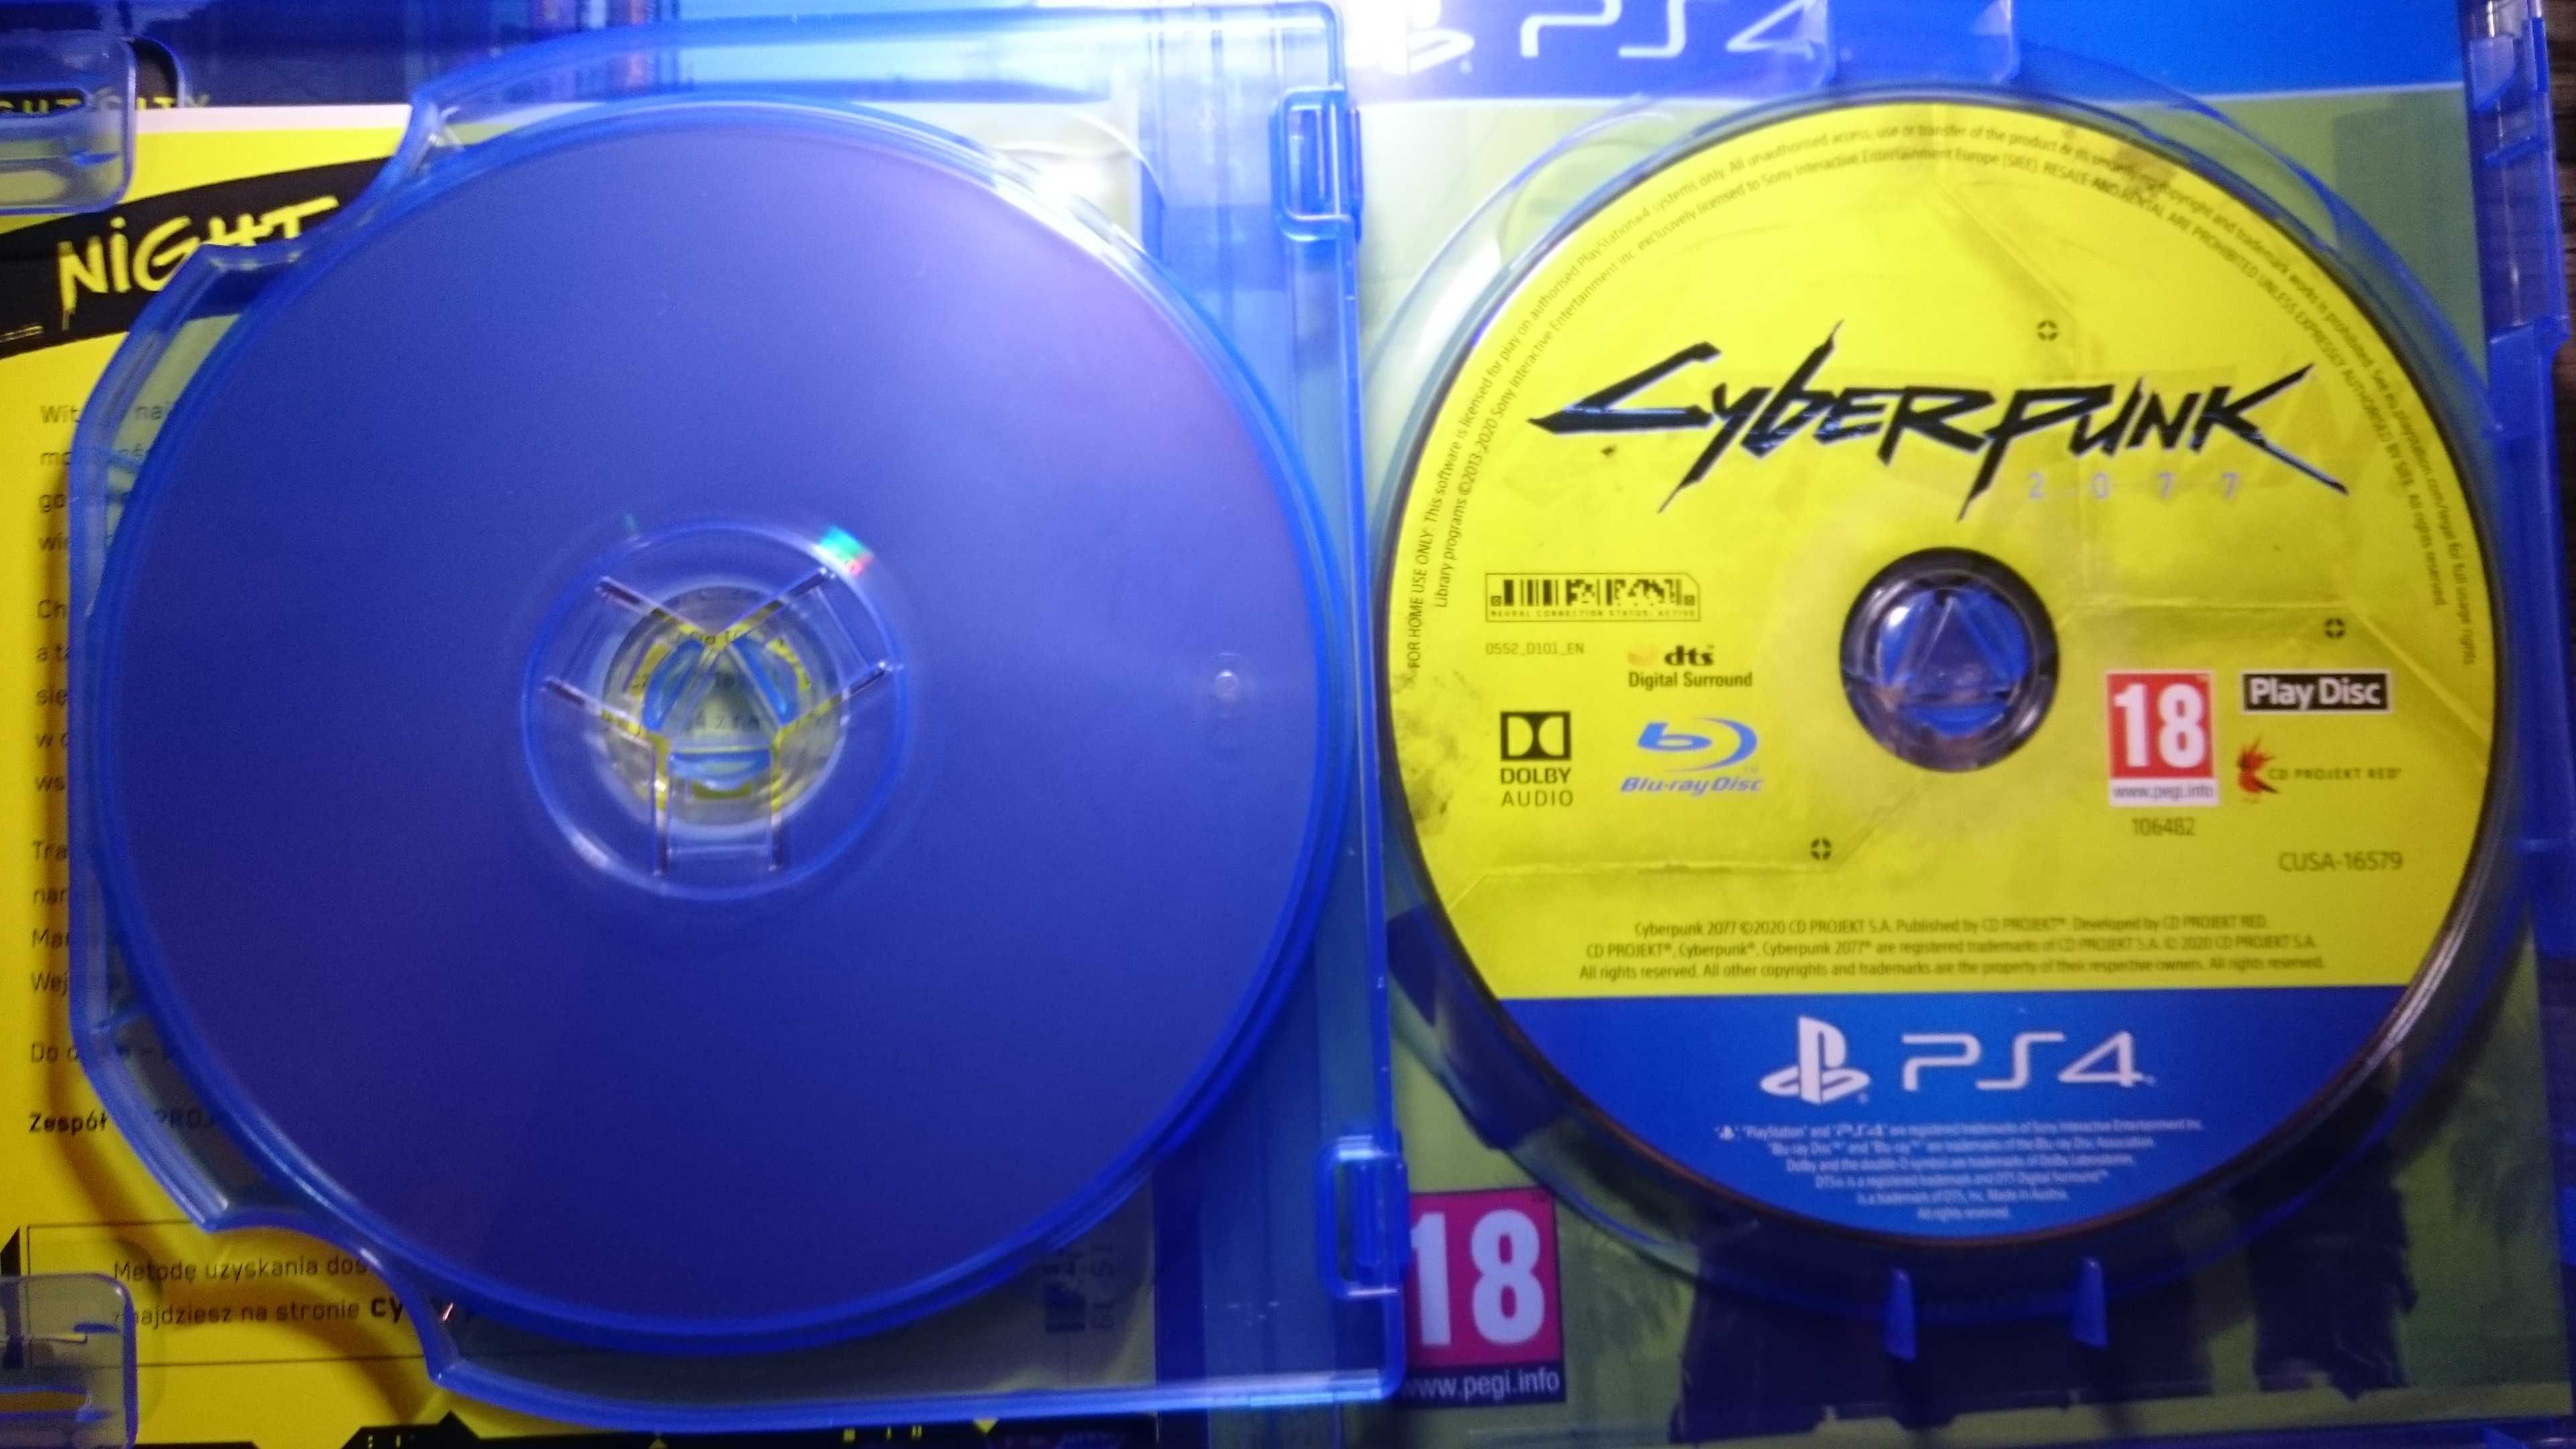 Gra Cyberpunk 2077 PS4 Playstation 4 polska wersja GTA V Spiderman